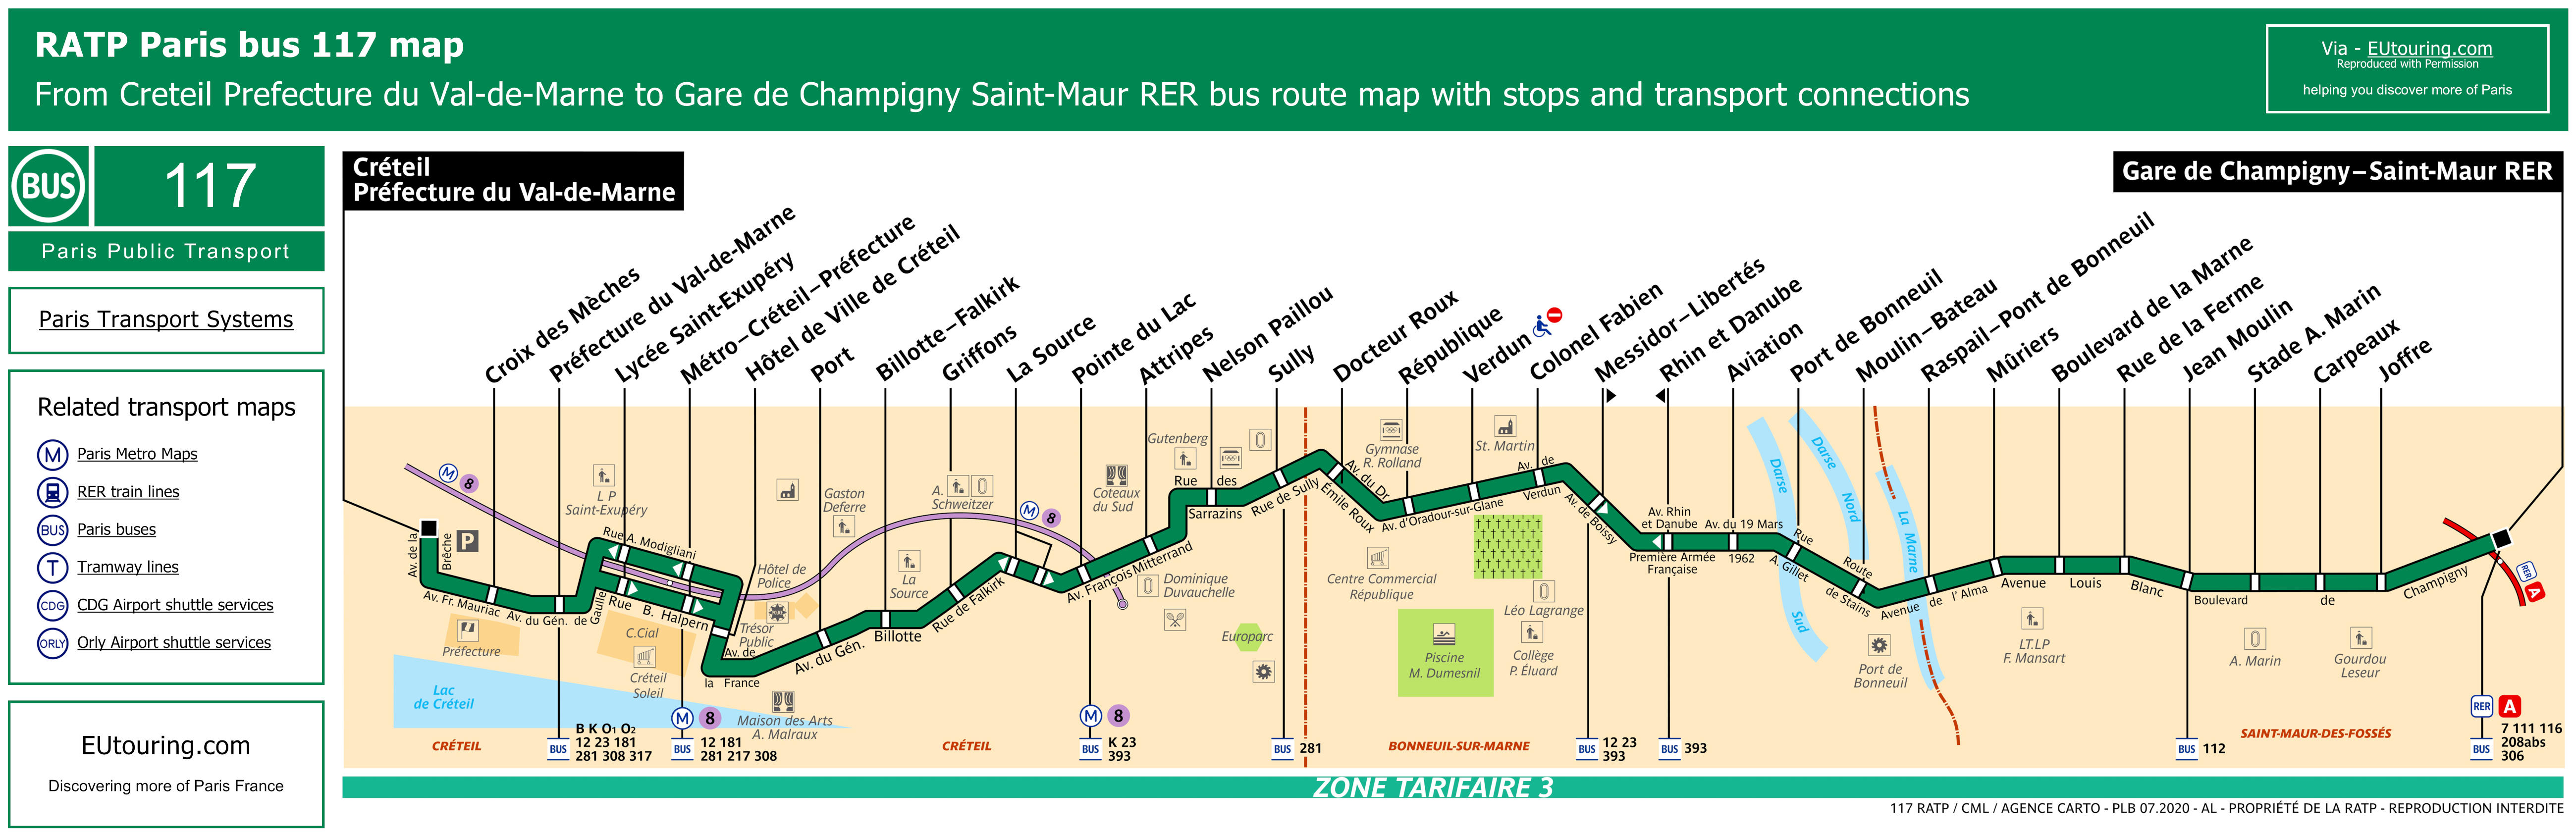 ratp route maps for paris bus lines 110 through to 119